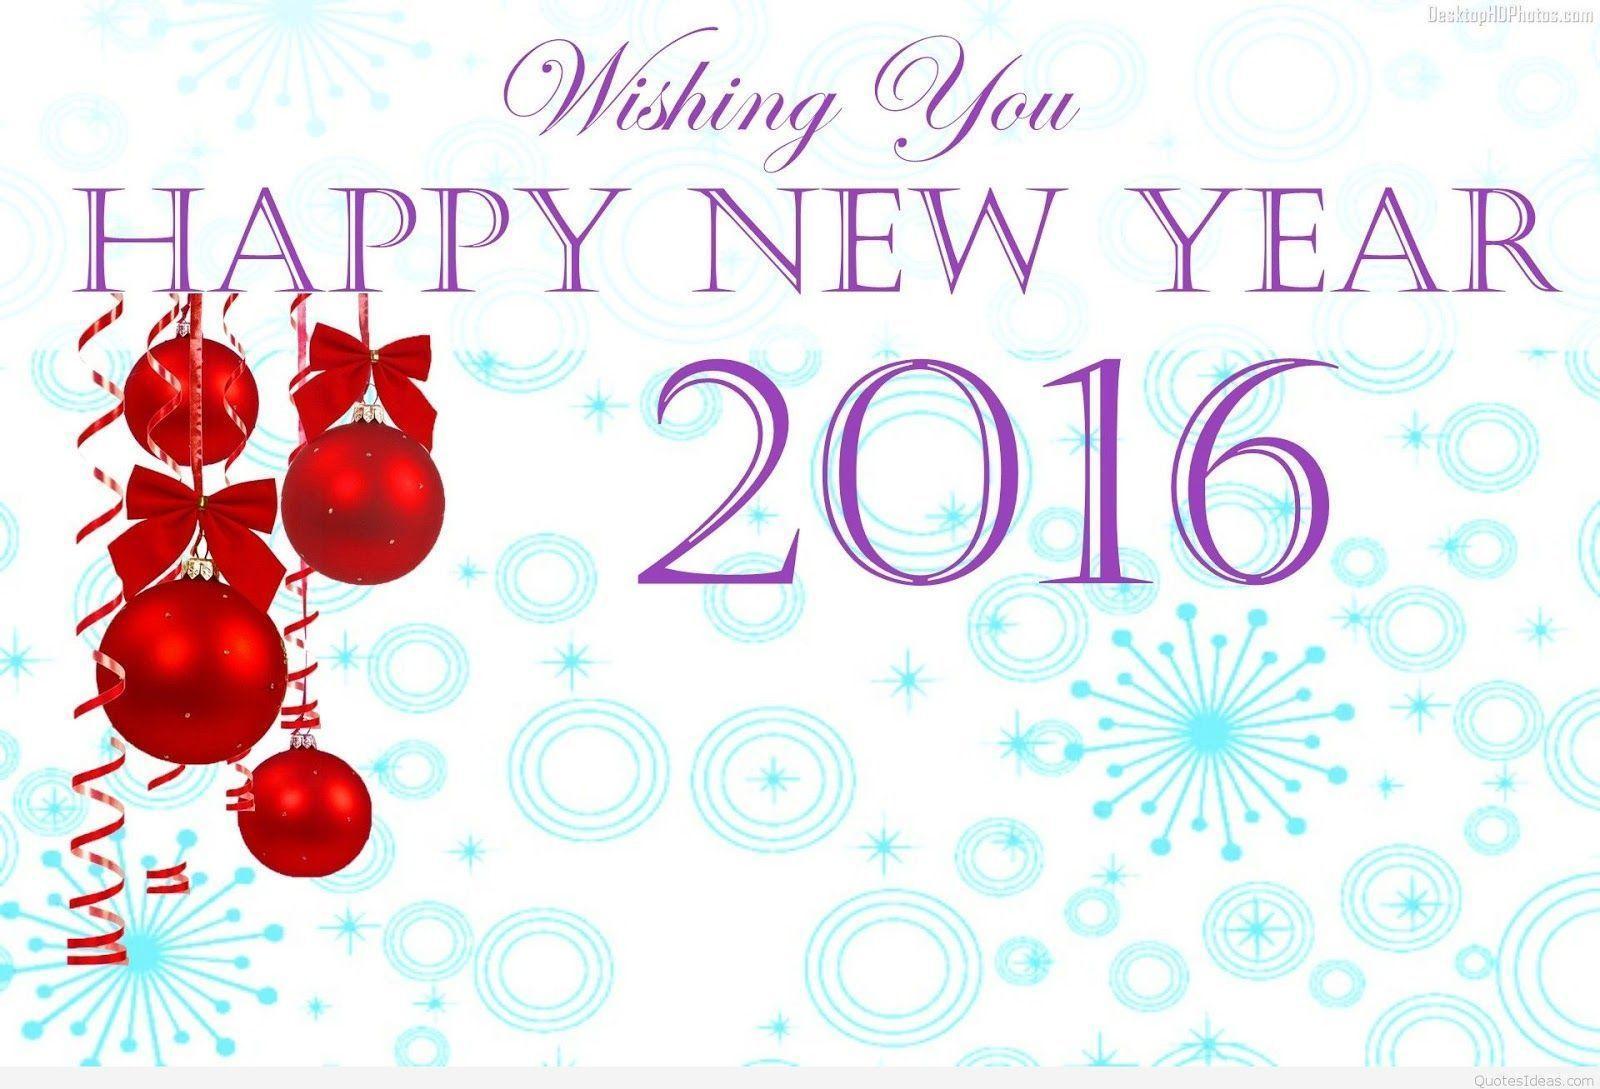 Happy New Year 2016 Greetings. Happy New Year Image 2016. Happy